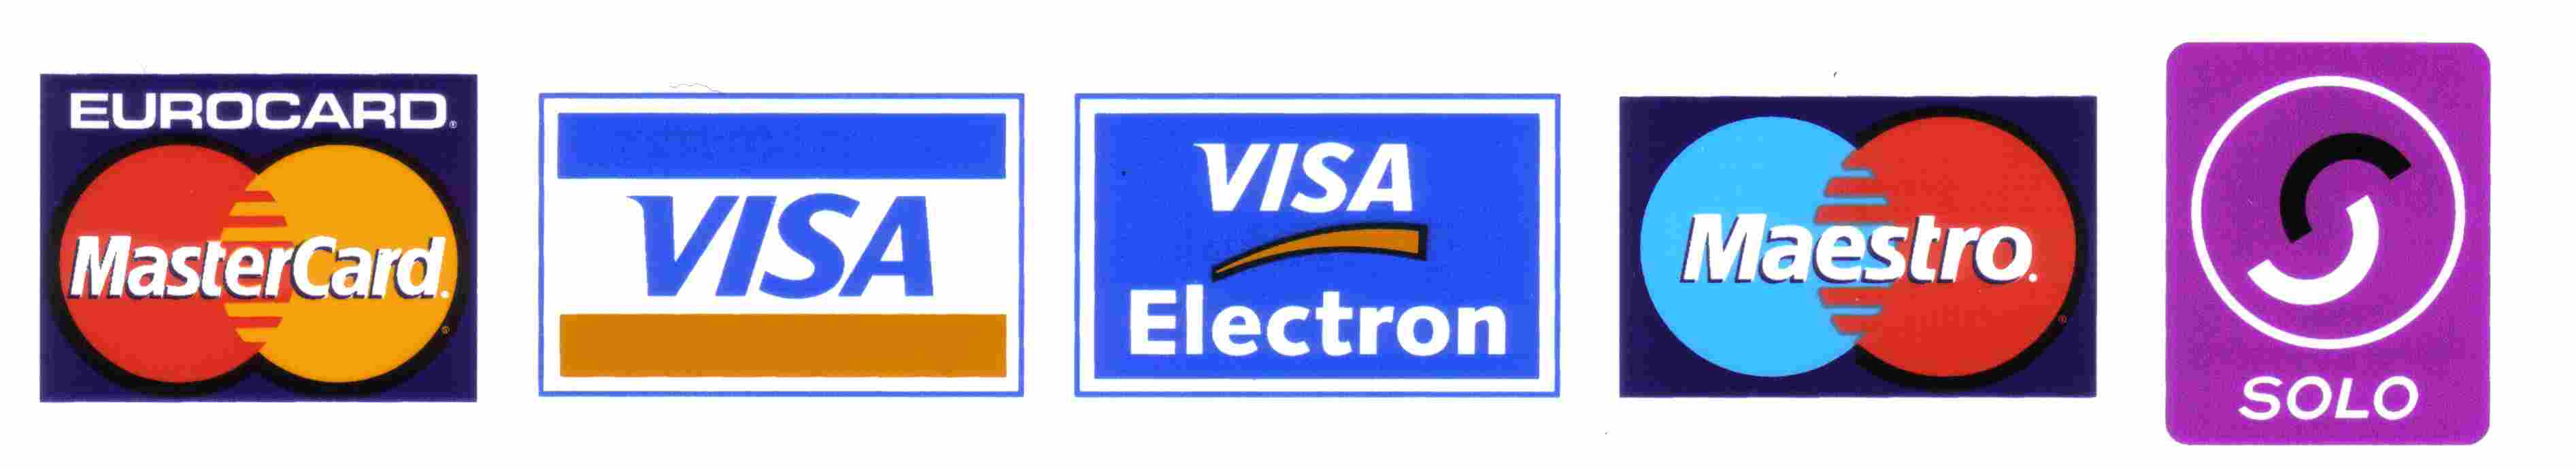 valium online ordering next day visa mastercard accepted logos